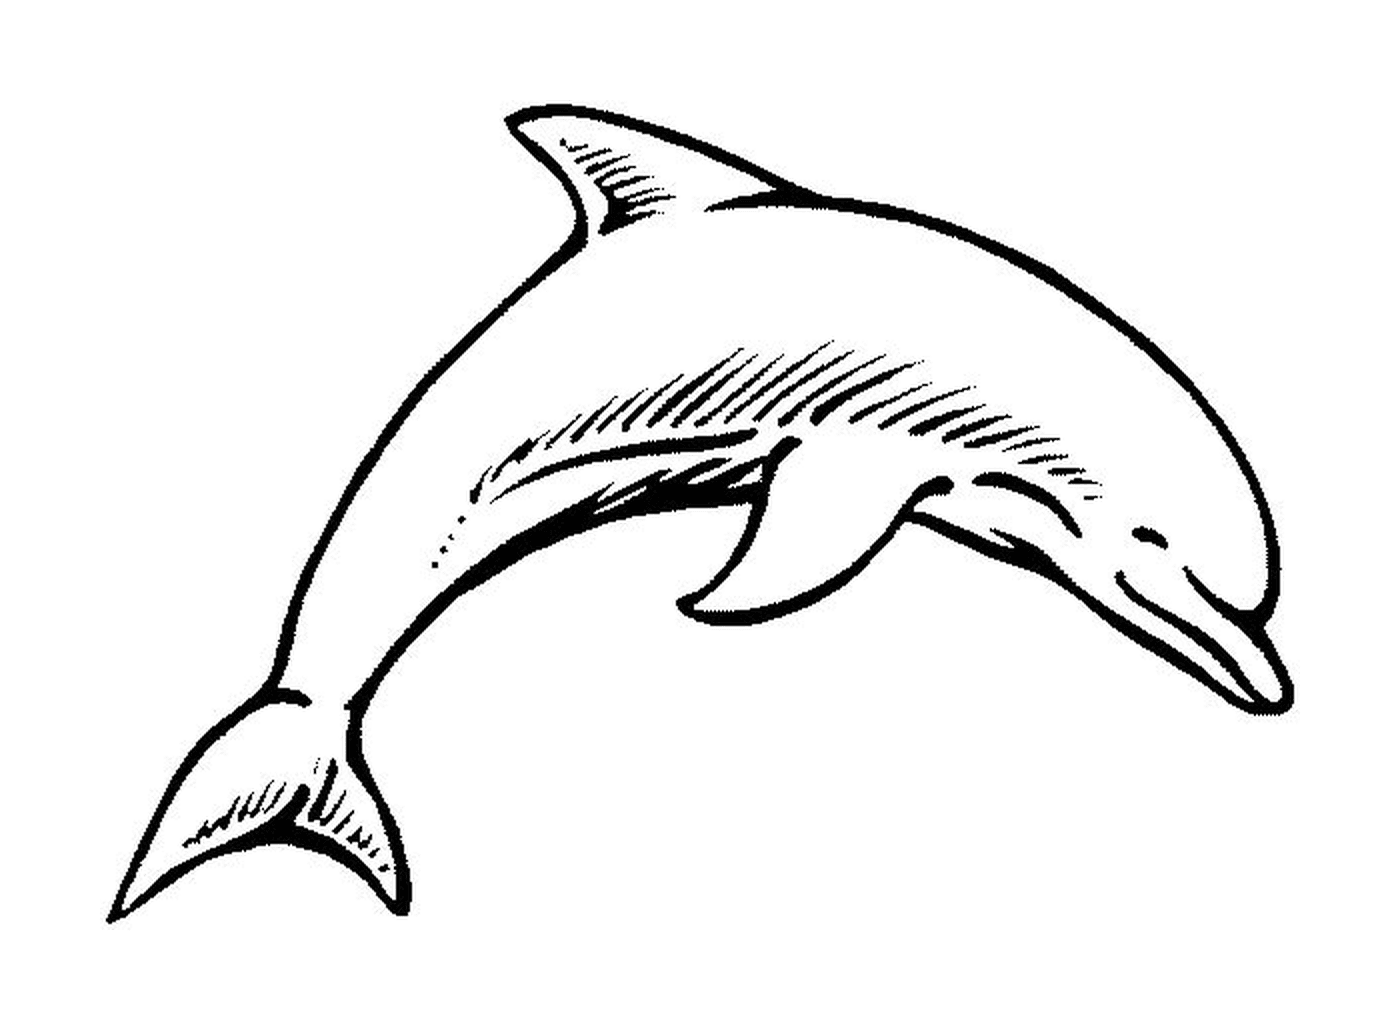   Un dauphin 